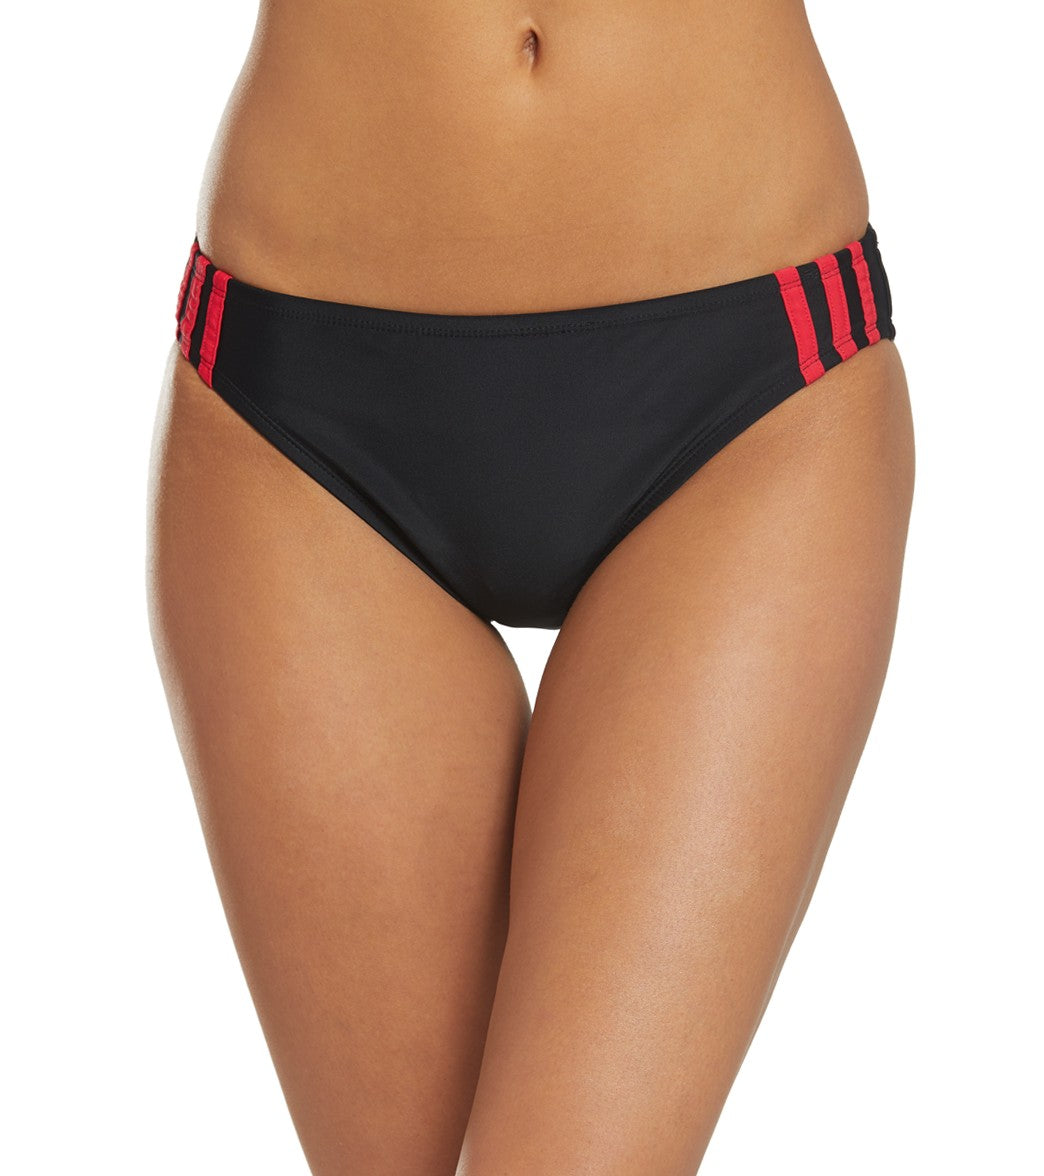 Adidas Sport Hipster Bikini Bottom at SwimOutlet.com